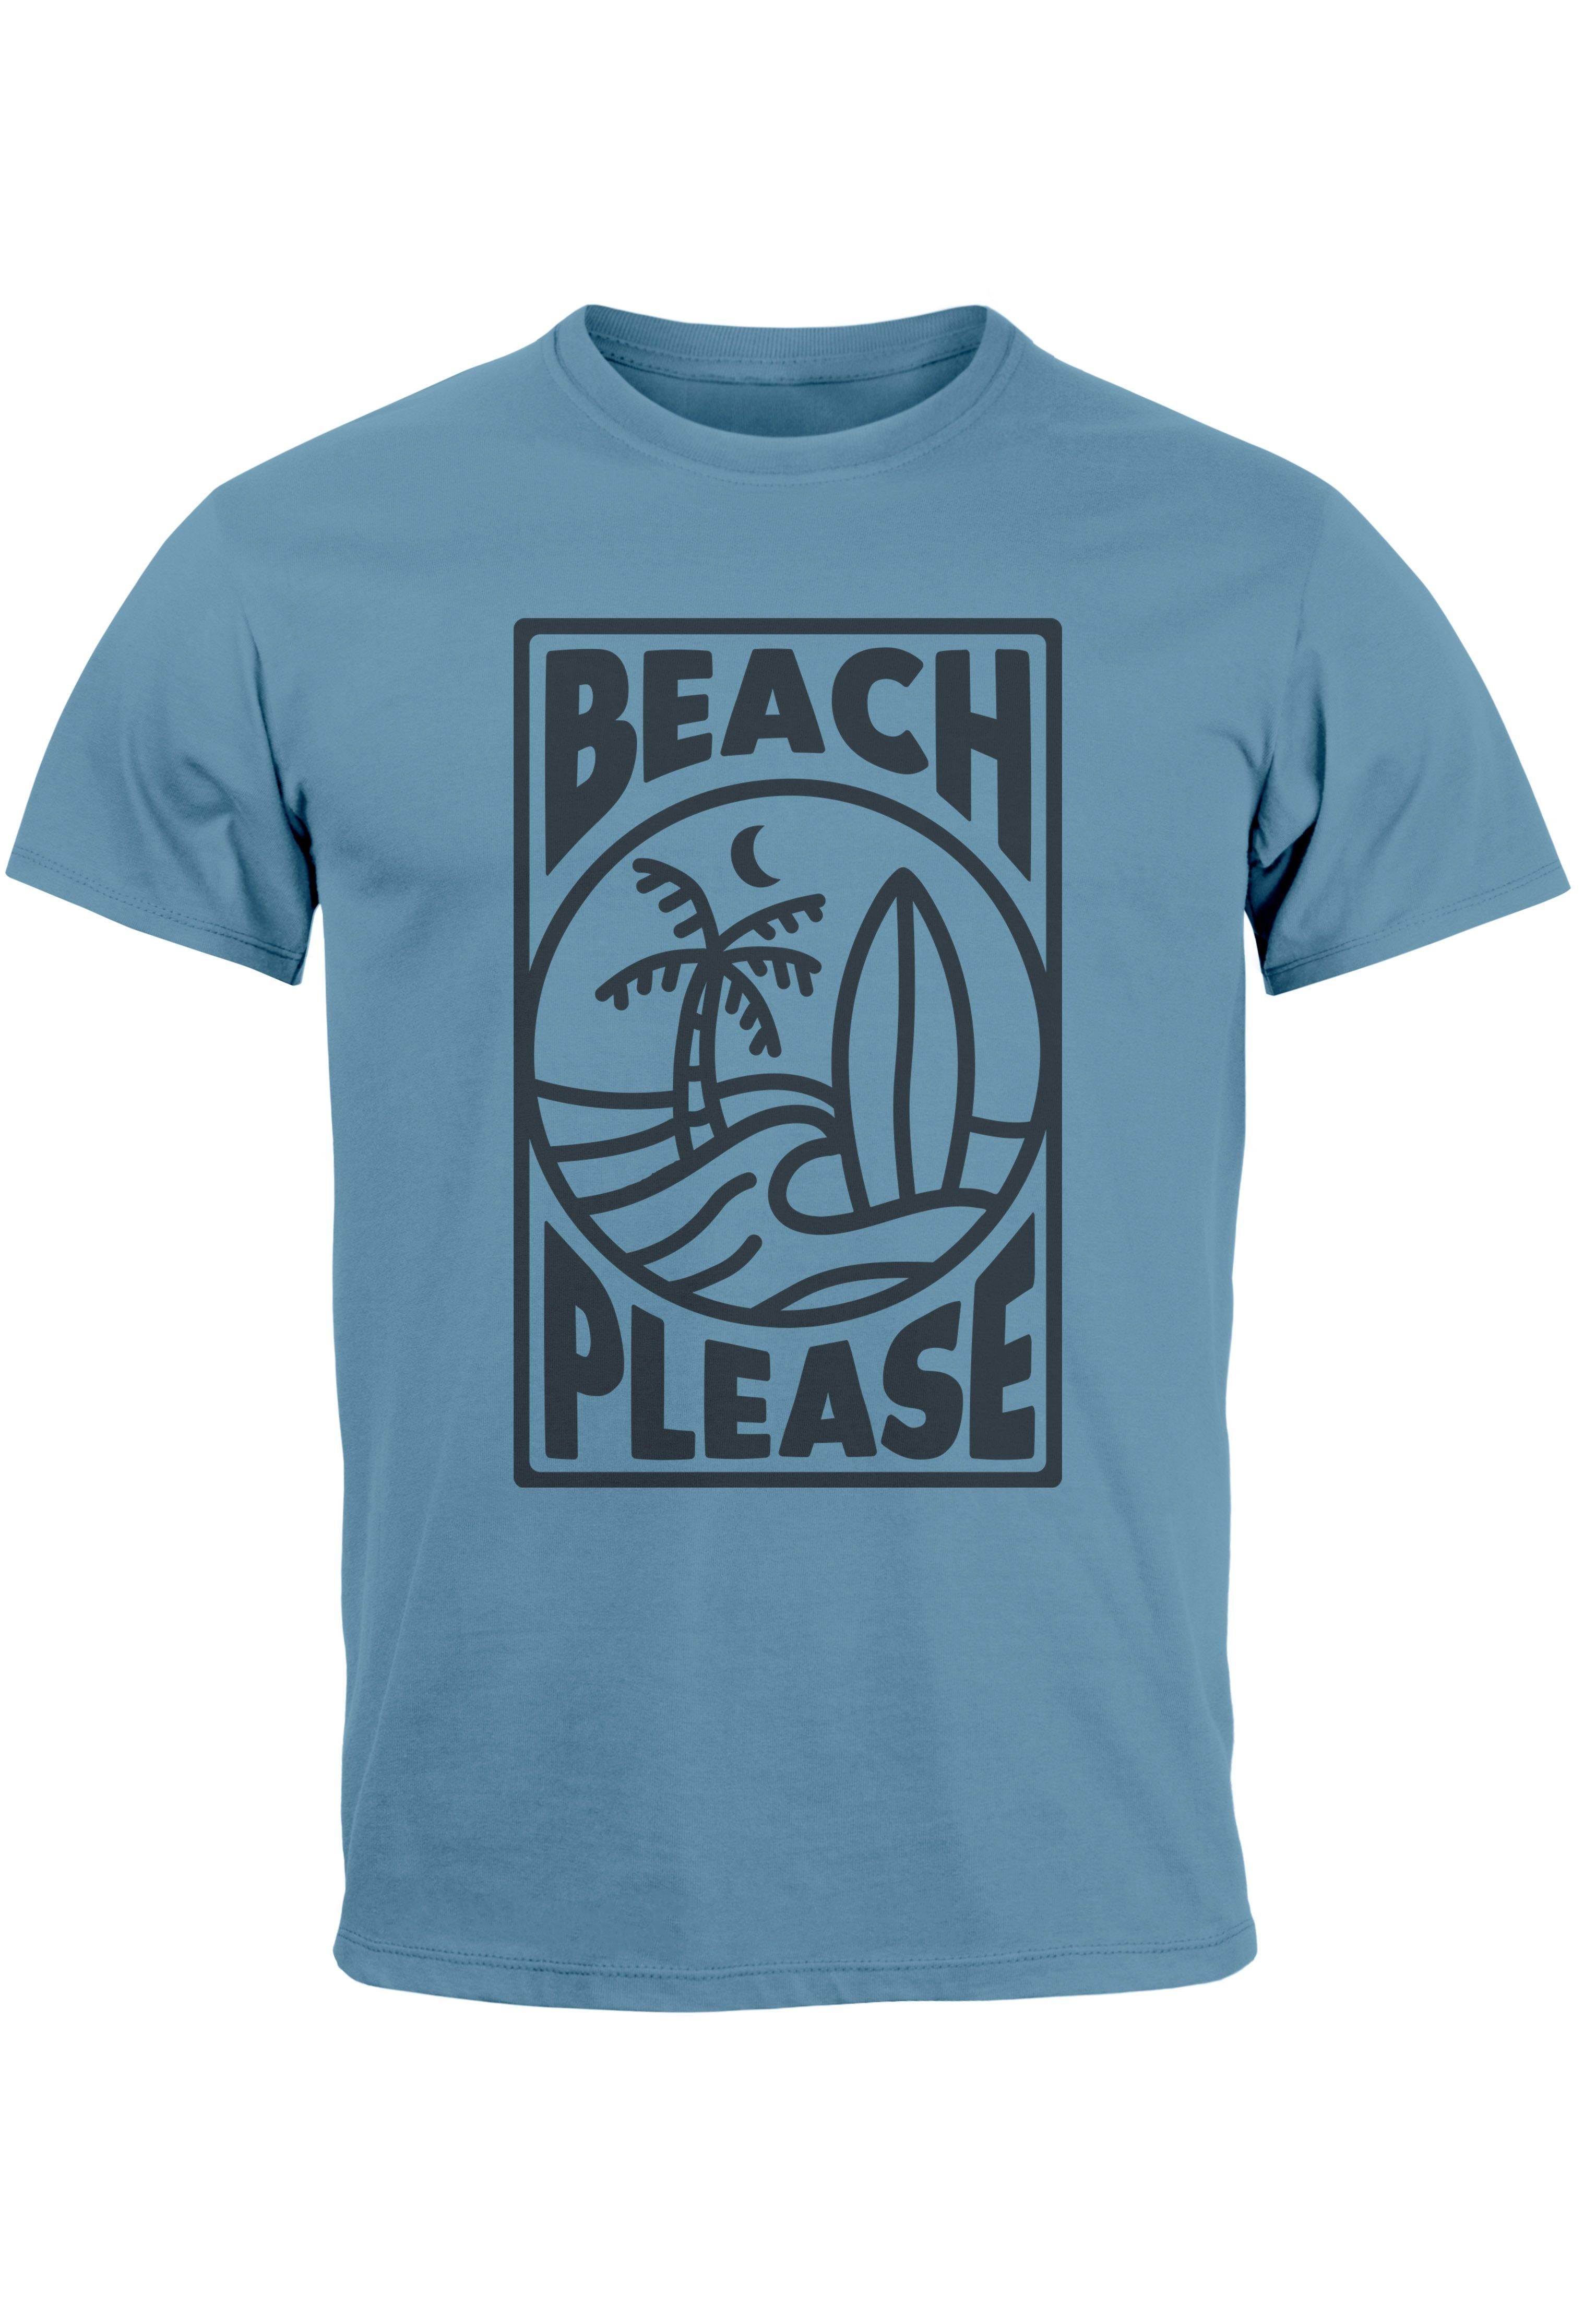 Surfing Herren Neverless Wave Surfboard Print-Shirt Please Sommer T-Shirt blue Beach Welle stone Print Print mit